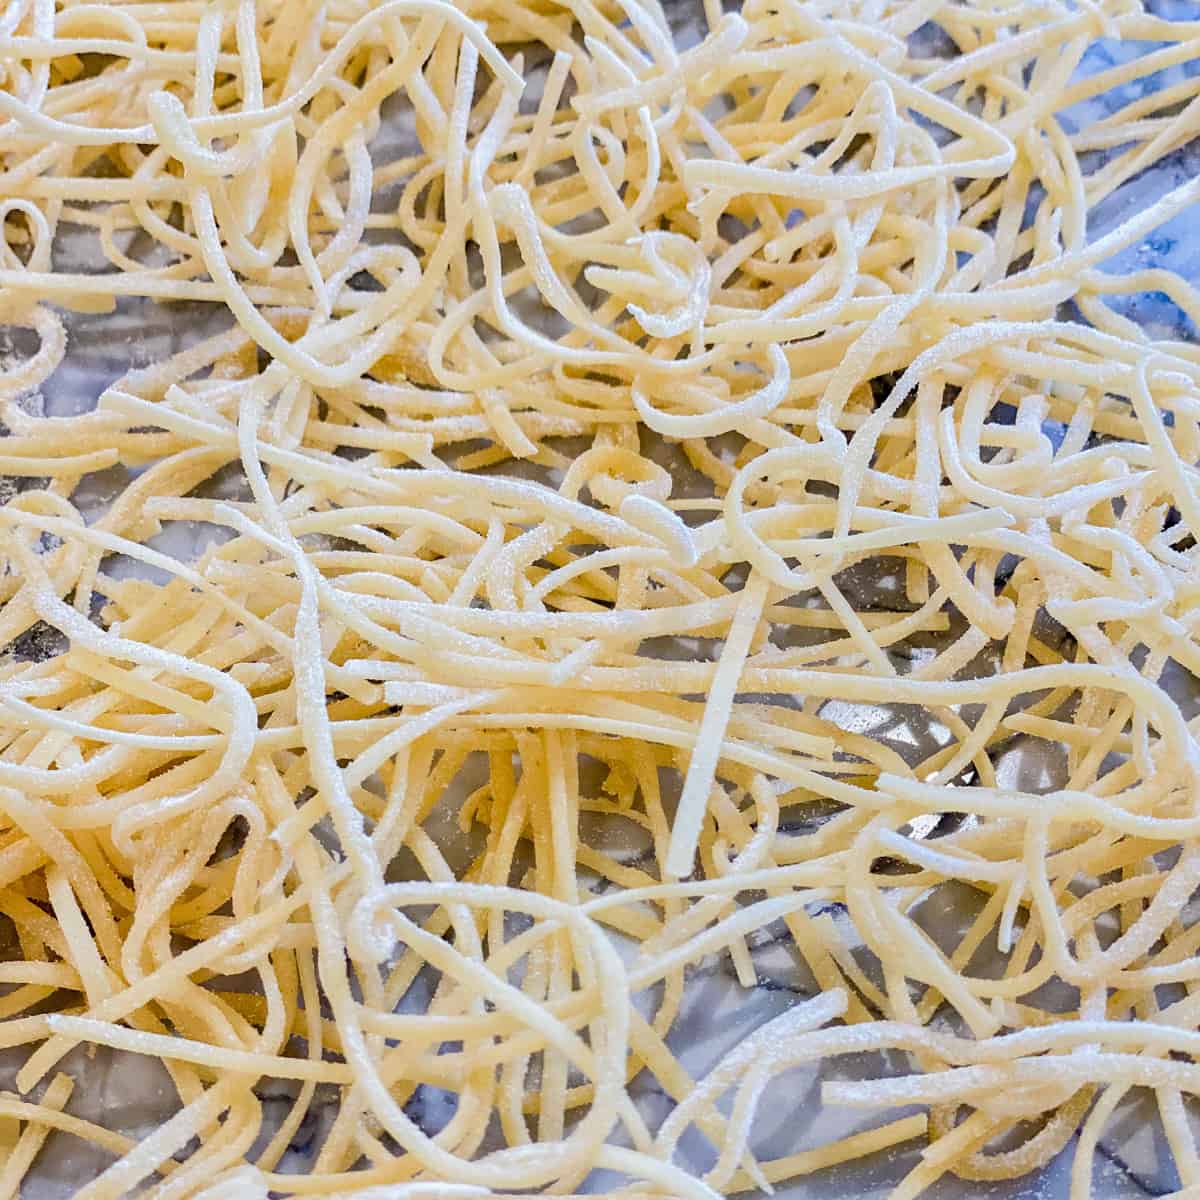 Kenome Pasta Roller Attachments Set for All KitchenAid Stand Mixer, Noodles Maker  Attachment, 3-Piece Pasta Cutter Accessories Set 